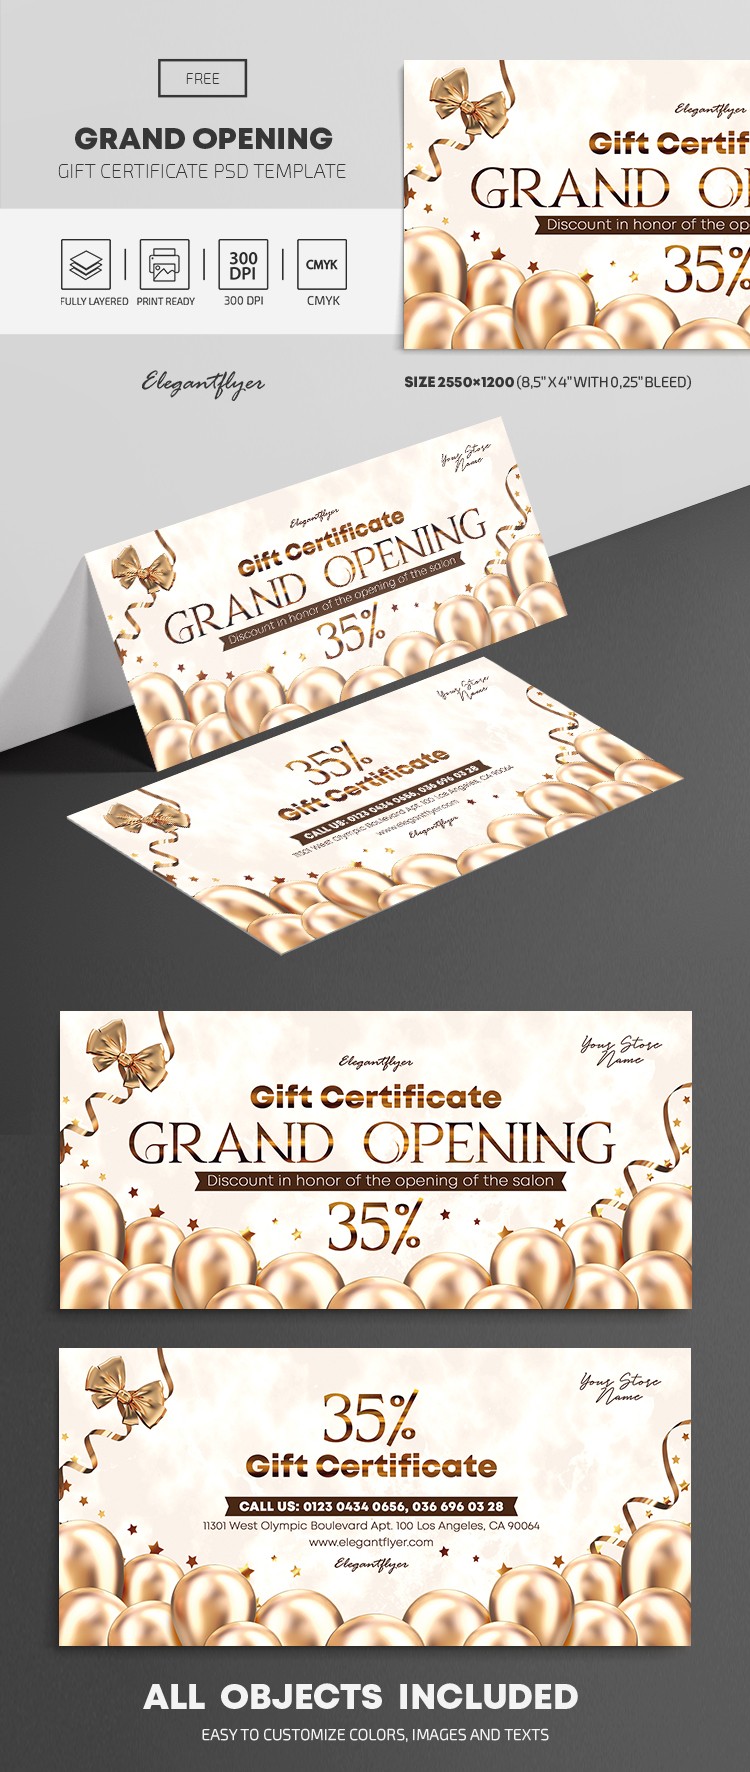 Grand Opening Gift Certificate by ElegantFlyer